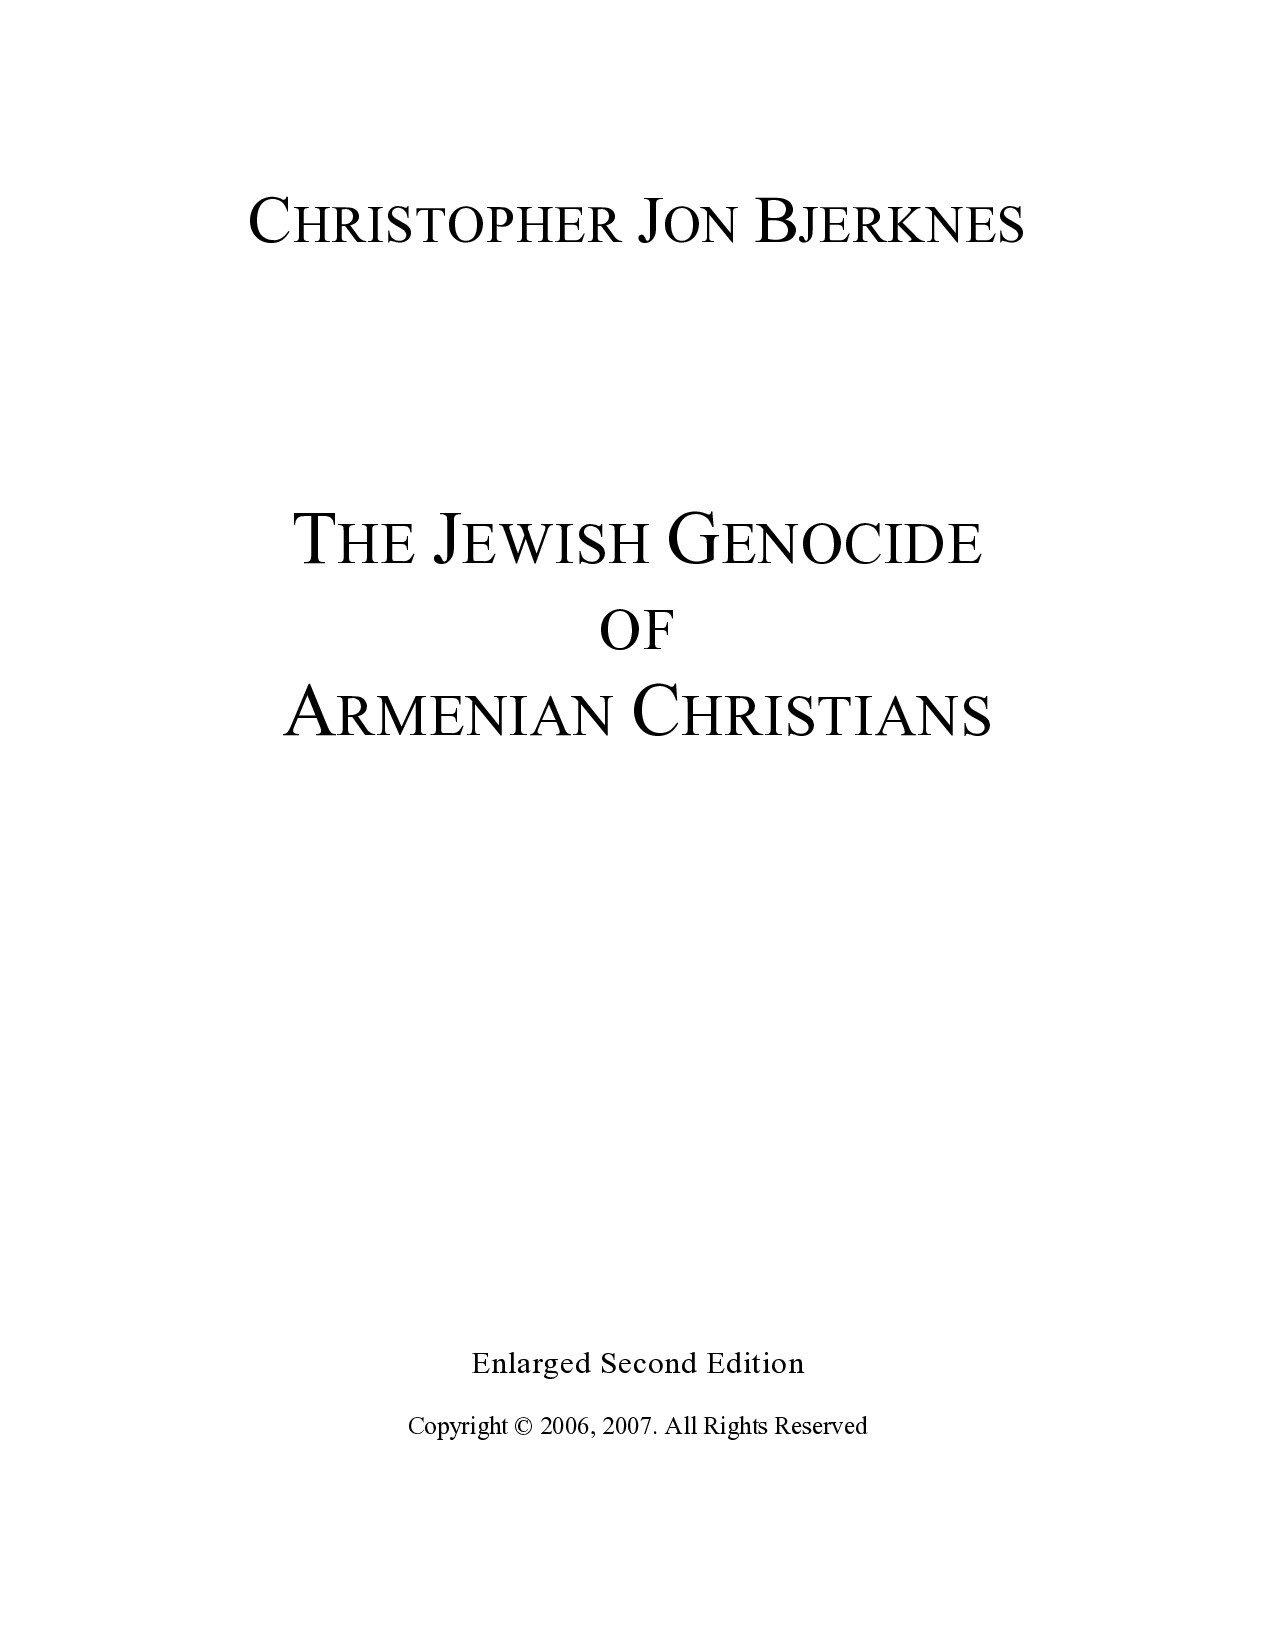 Bjerknes, Christopher John; The Jewish Genocide of Armenian Christians